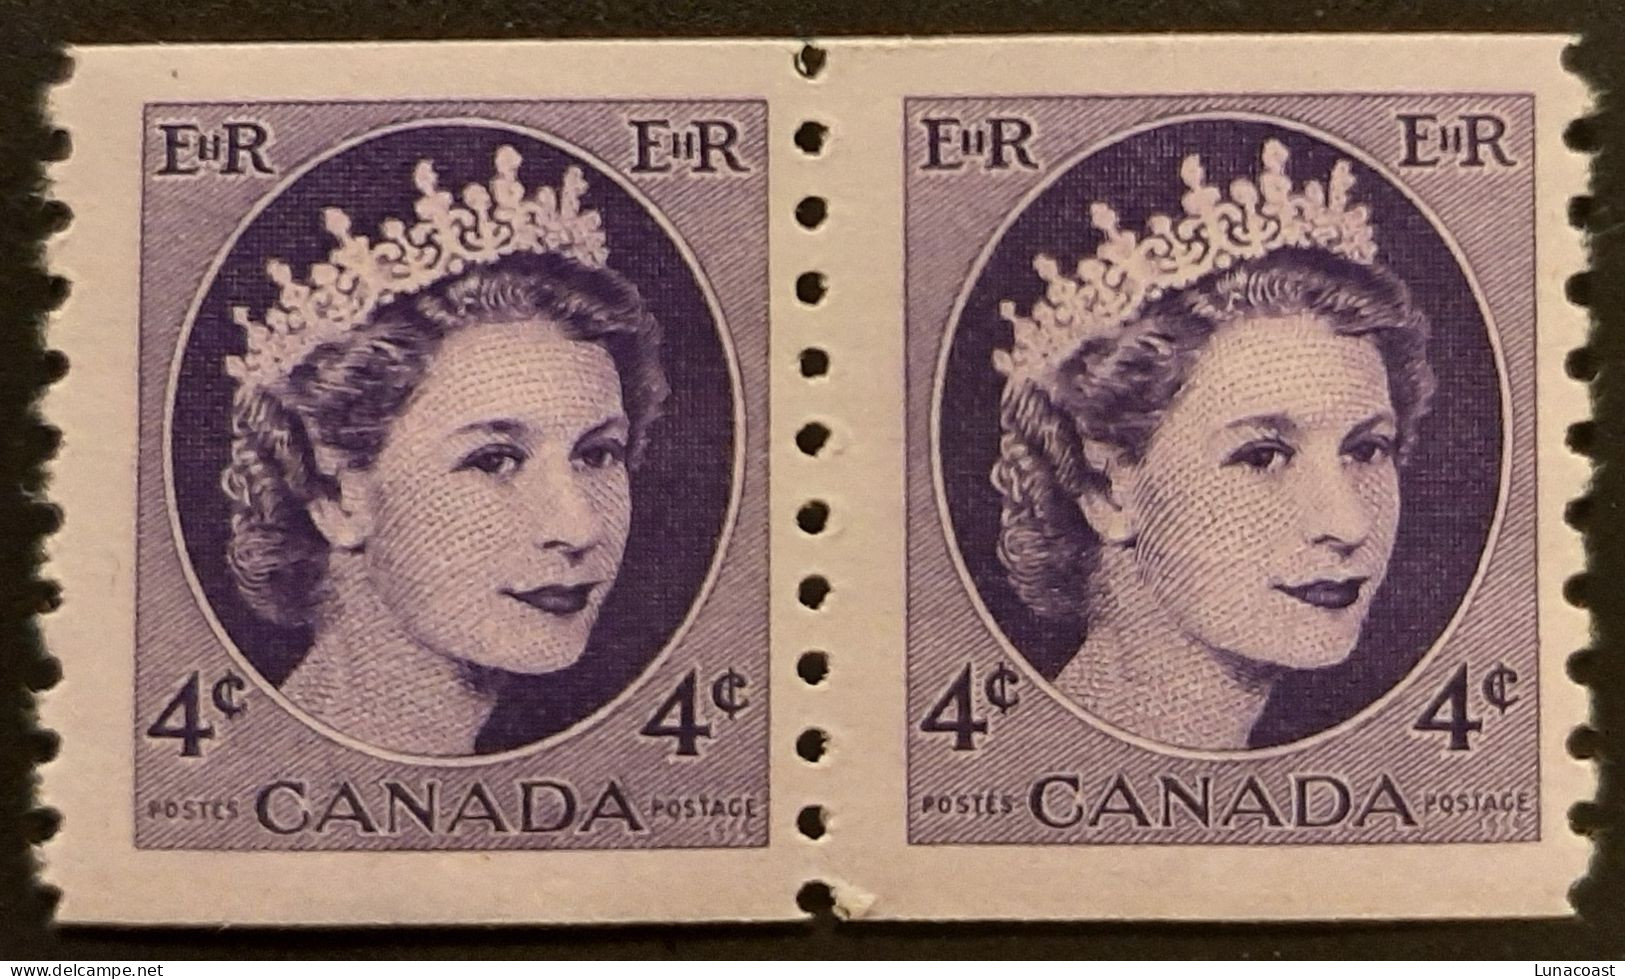 Canada 1954 MNH Sc #345** -346**-347**  2 X 2c-4c-5c Coil Stamps, Wildling Portrait - Nuovi